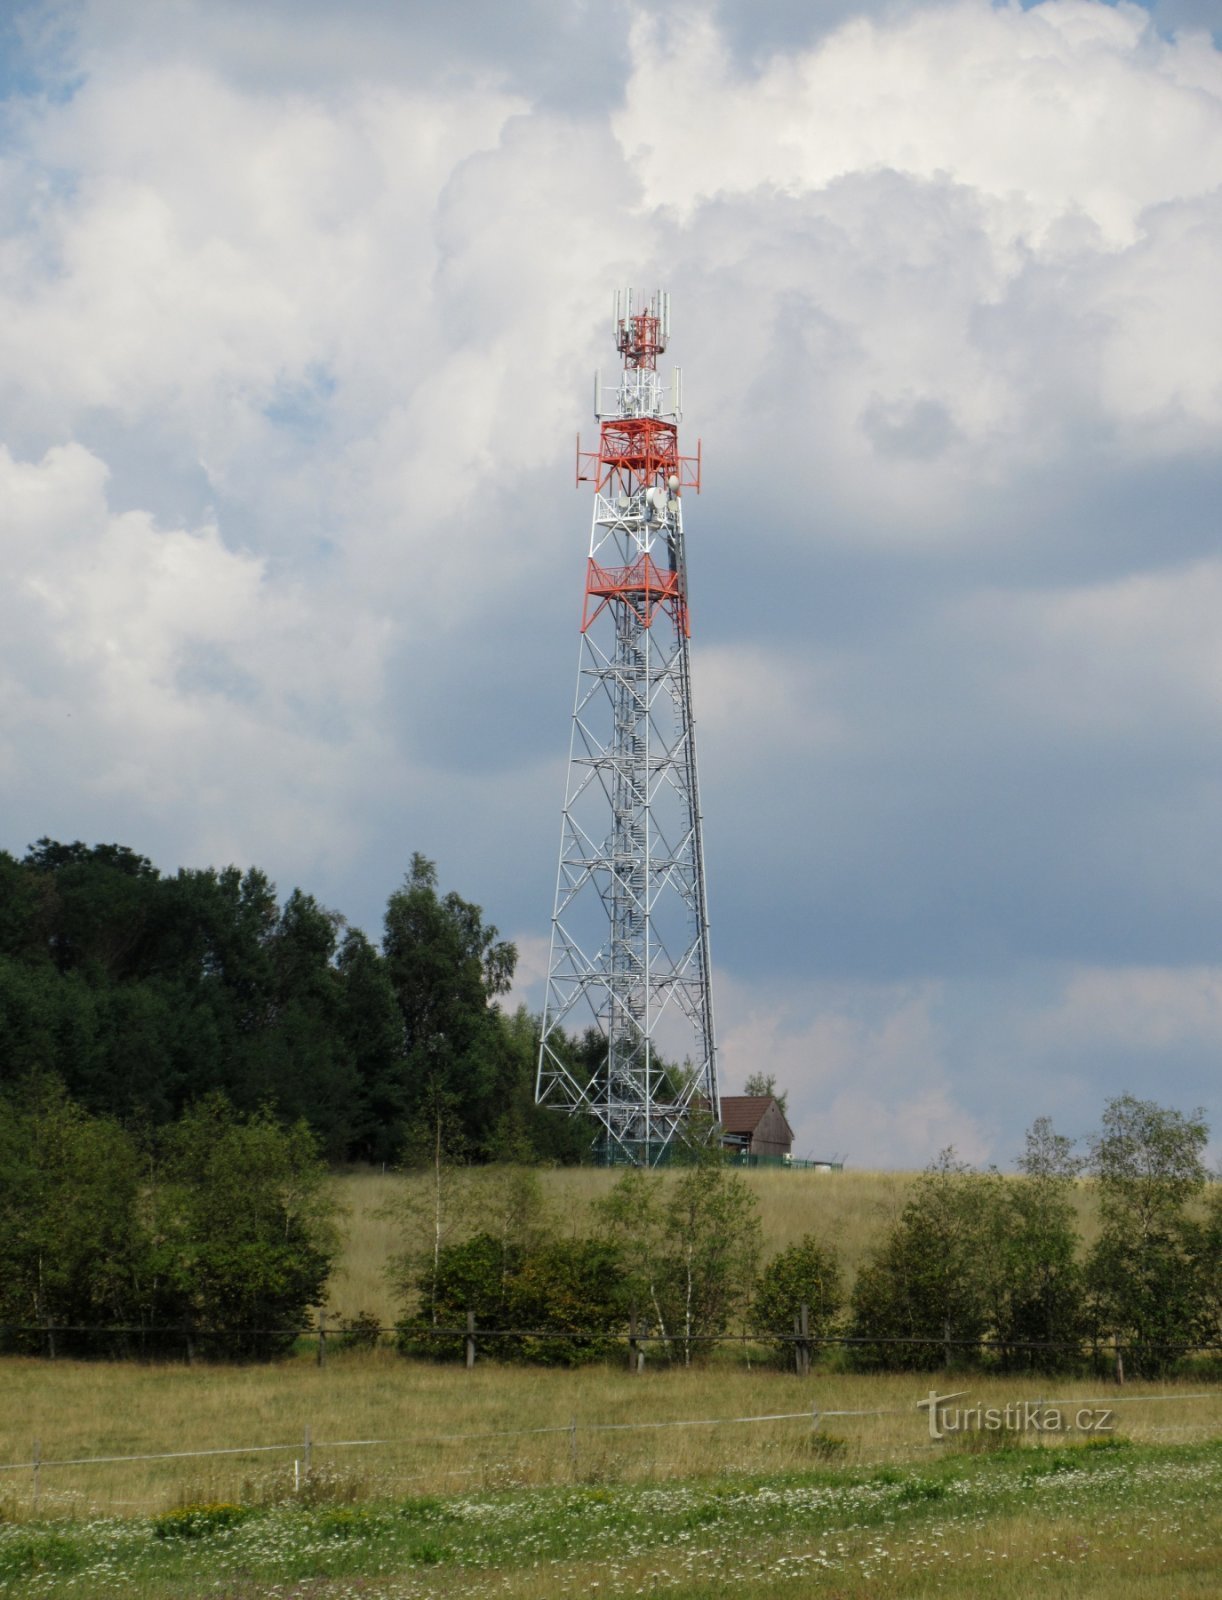 Guardia - torre de vigilancia Březinka cerca de Bernartic